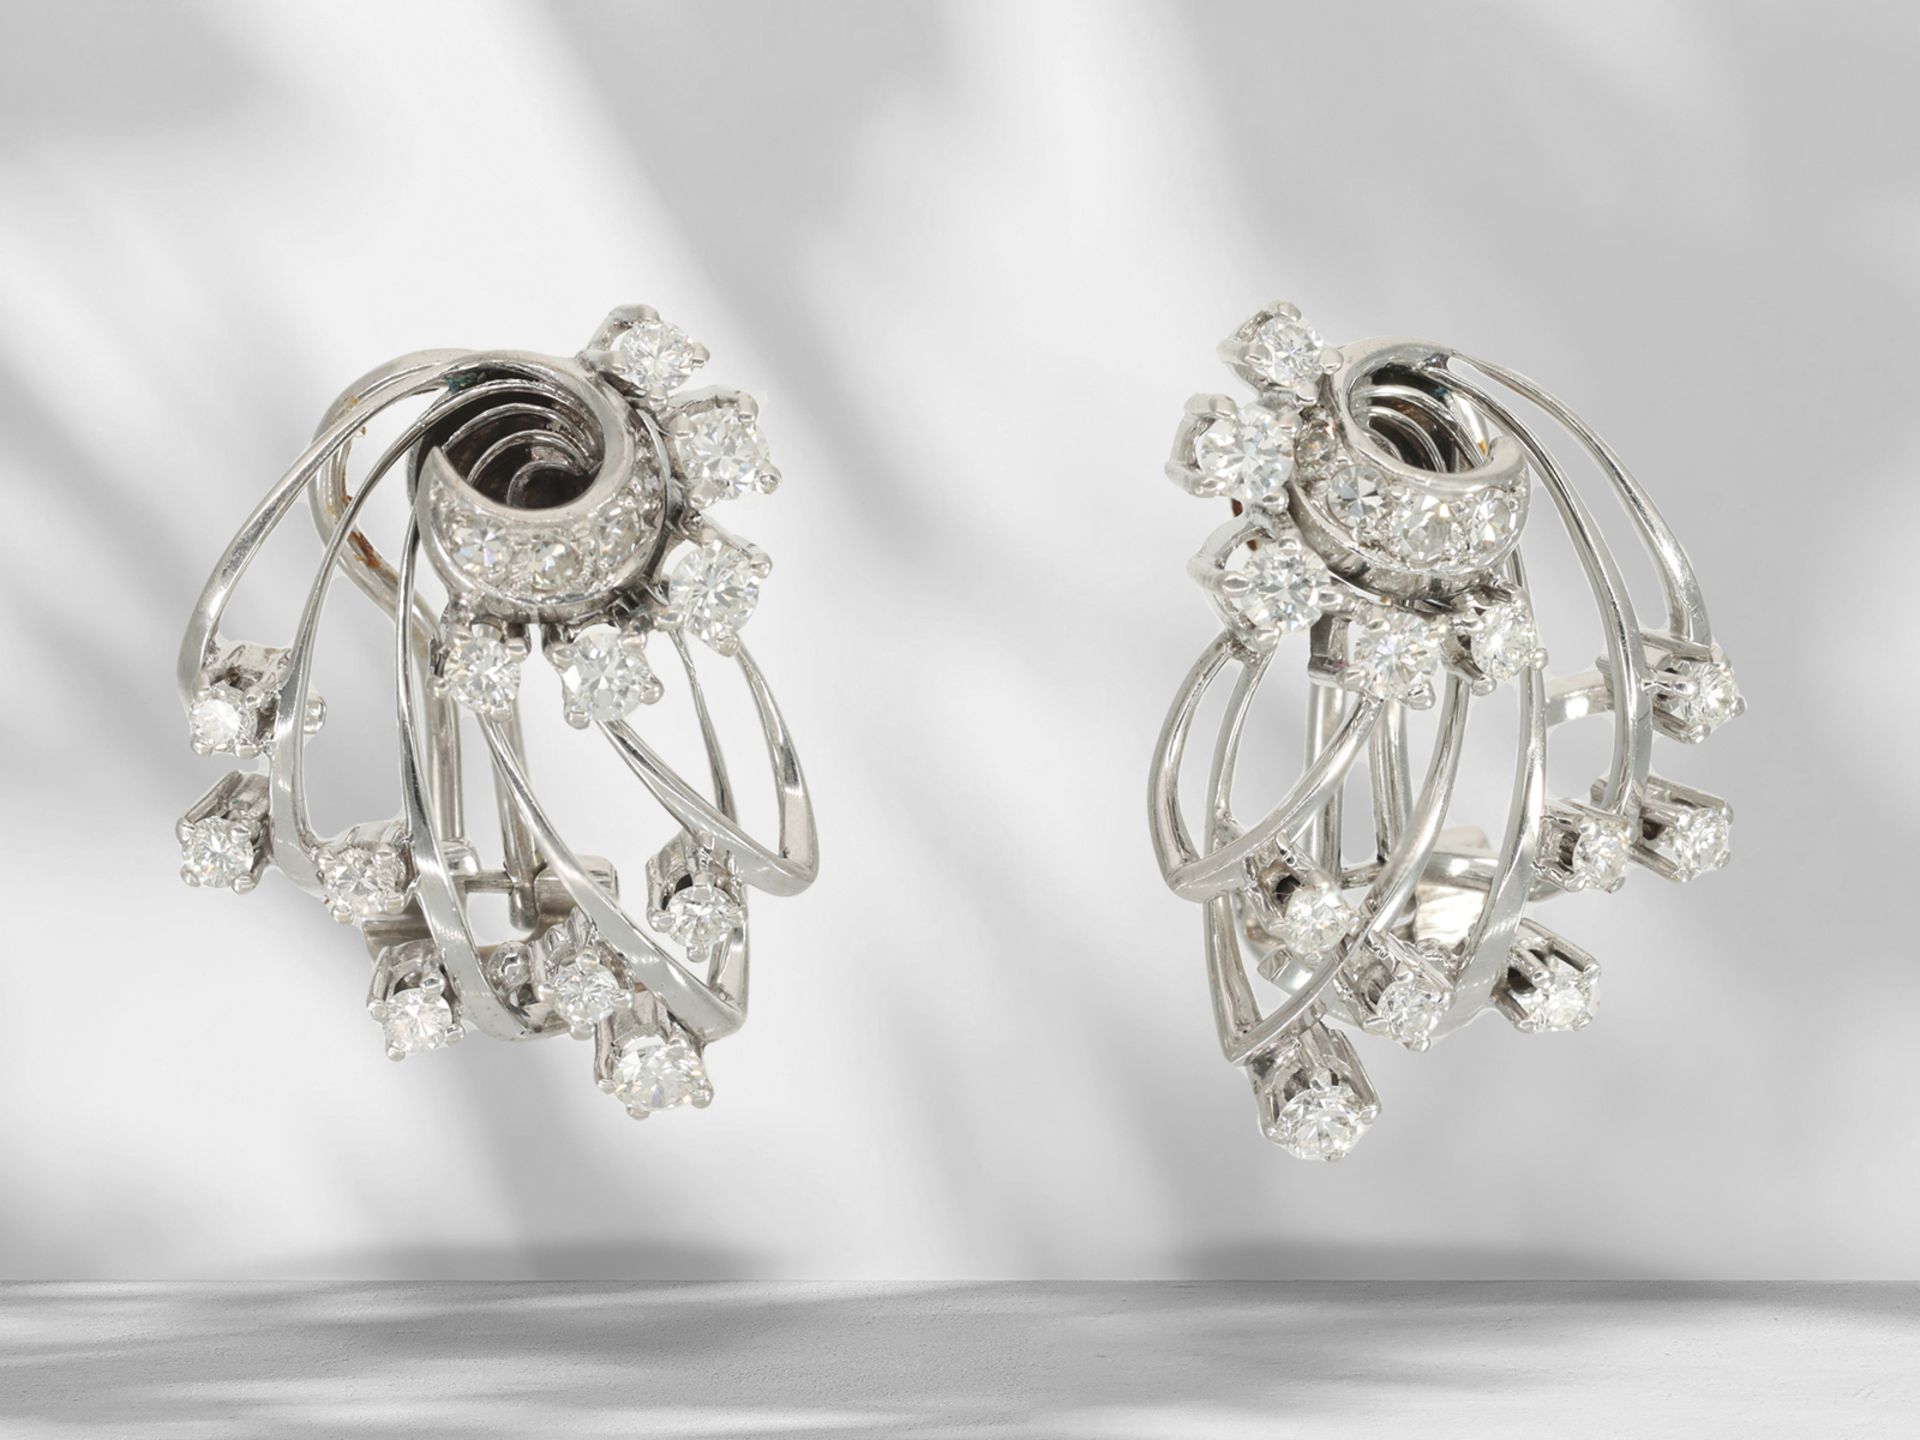 Earrings: decorative designer goldsmith work with brilliant-cut diamonds, 18K white gold, handmade b - Image 3 of 4